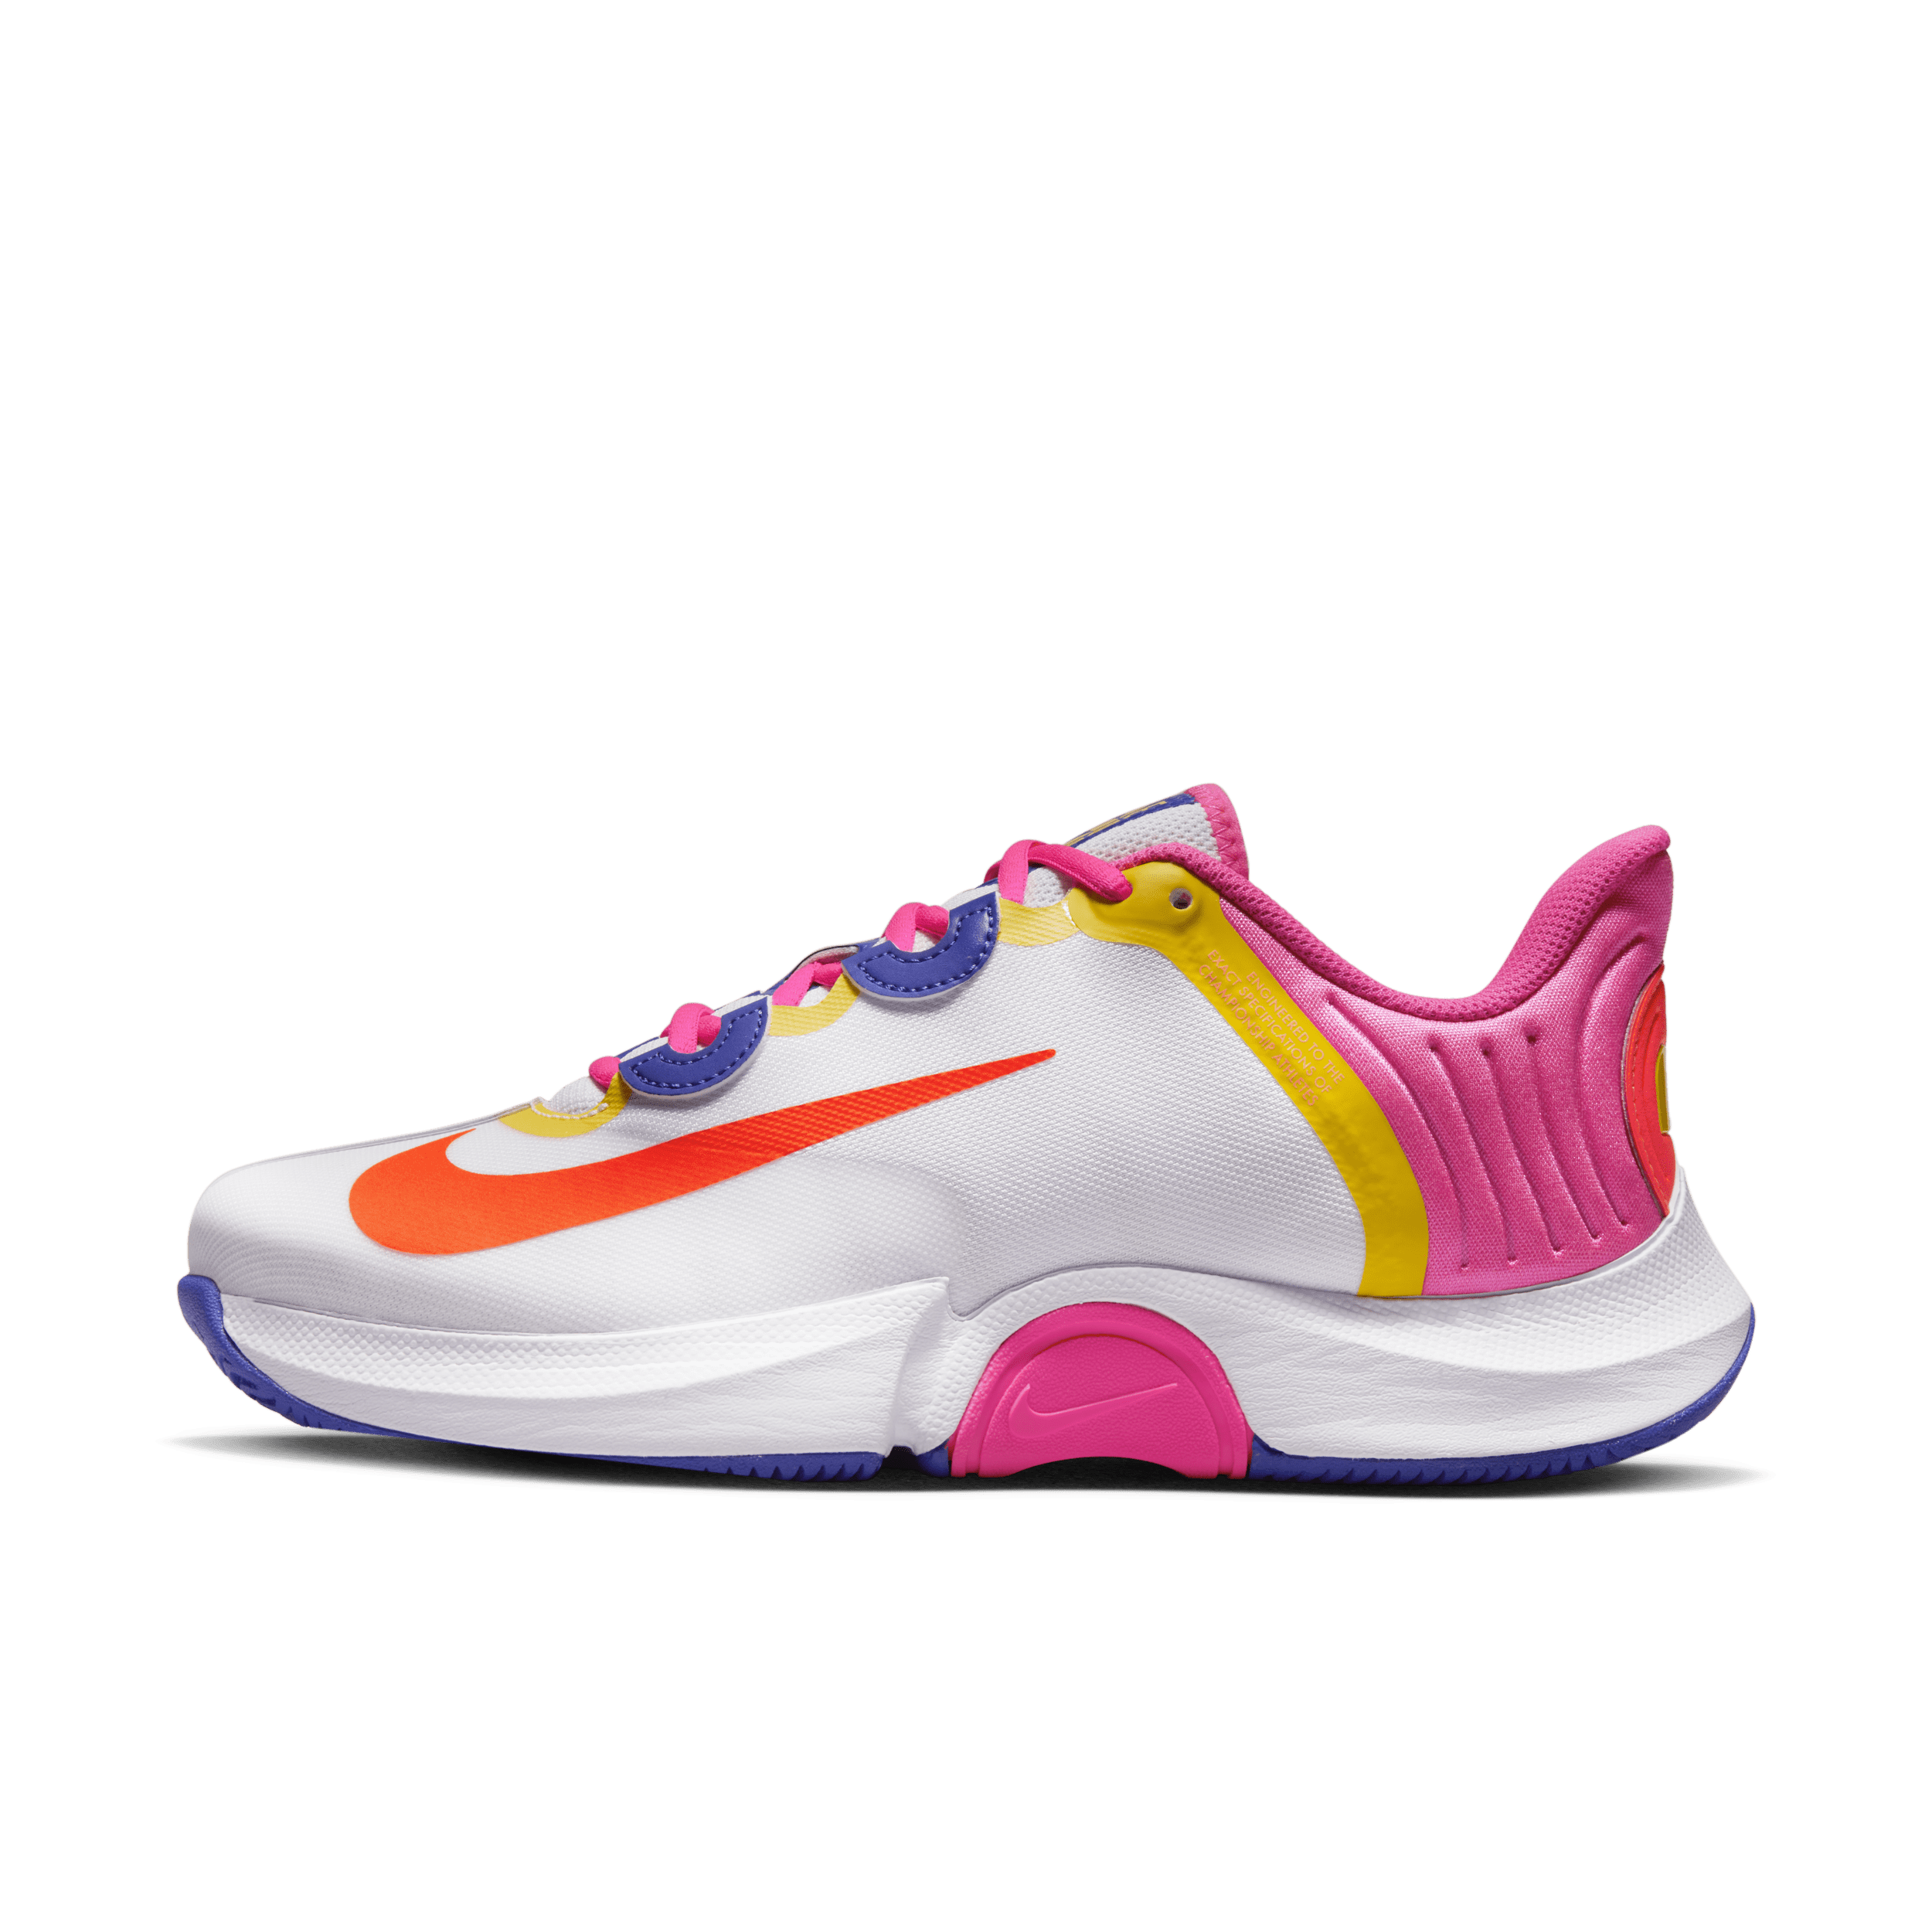 Sapatilhas de ténis para piso duro Nike Zoom GP Turbo Naomi Osaka - Branco